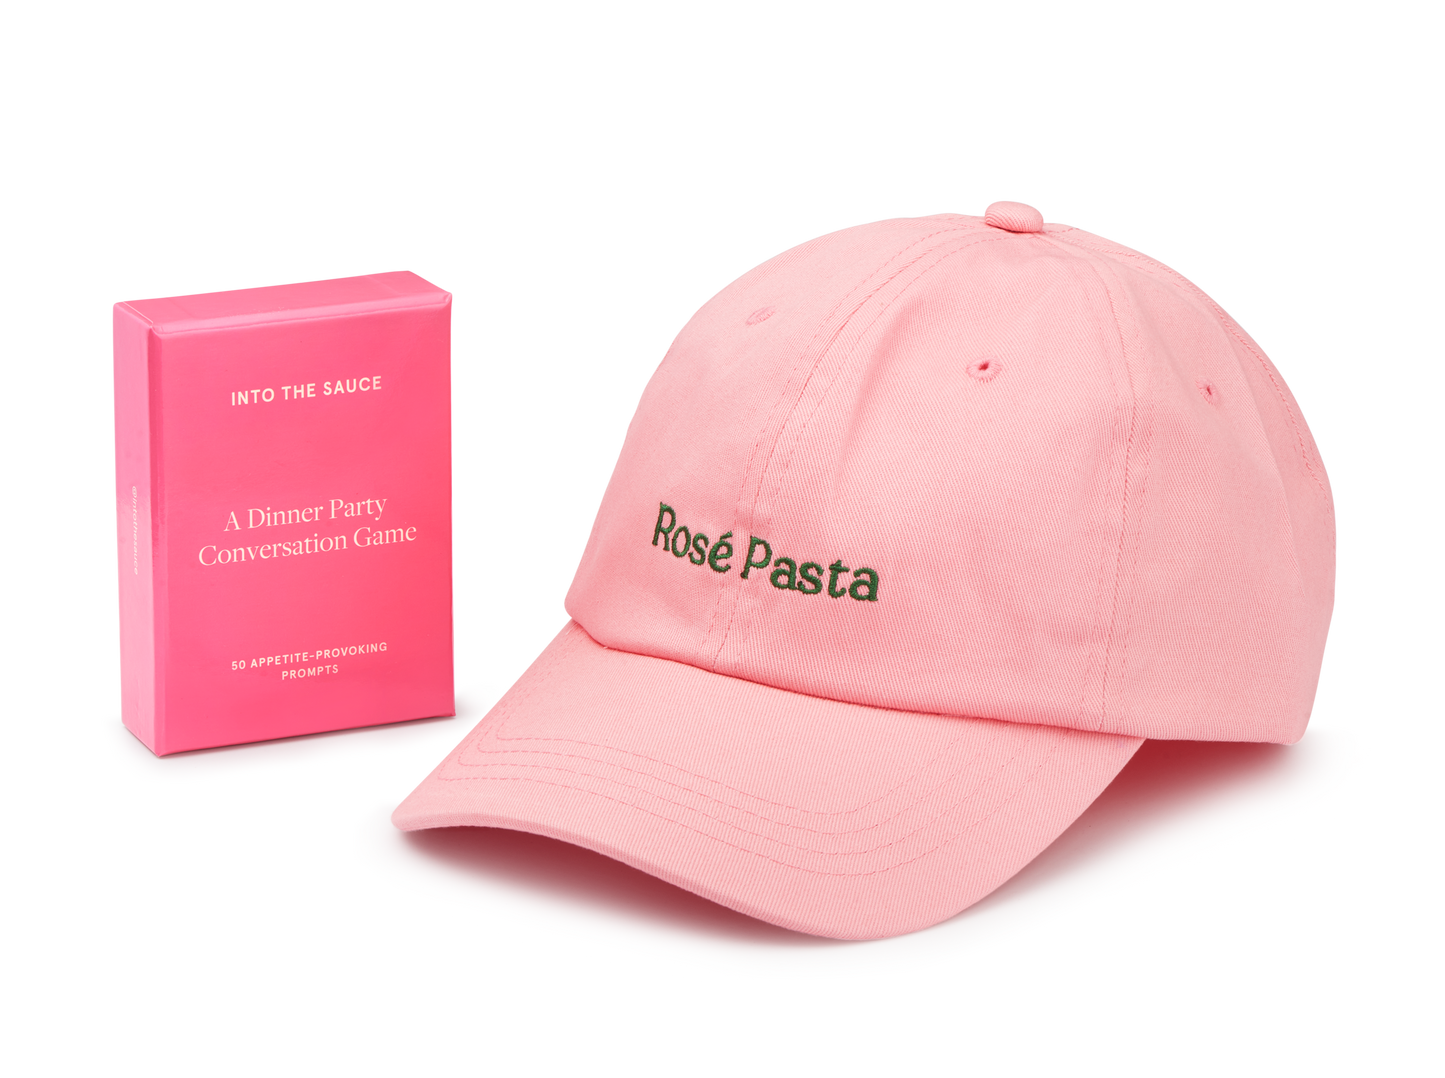 Conversation Cards & Rosé Pasta Cap Duo